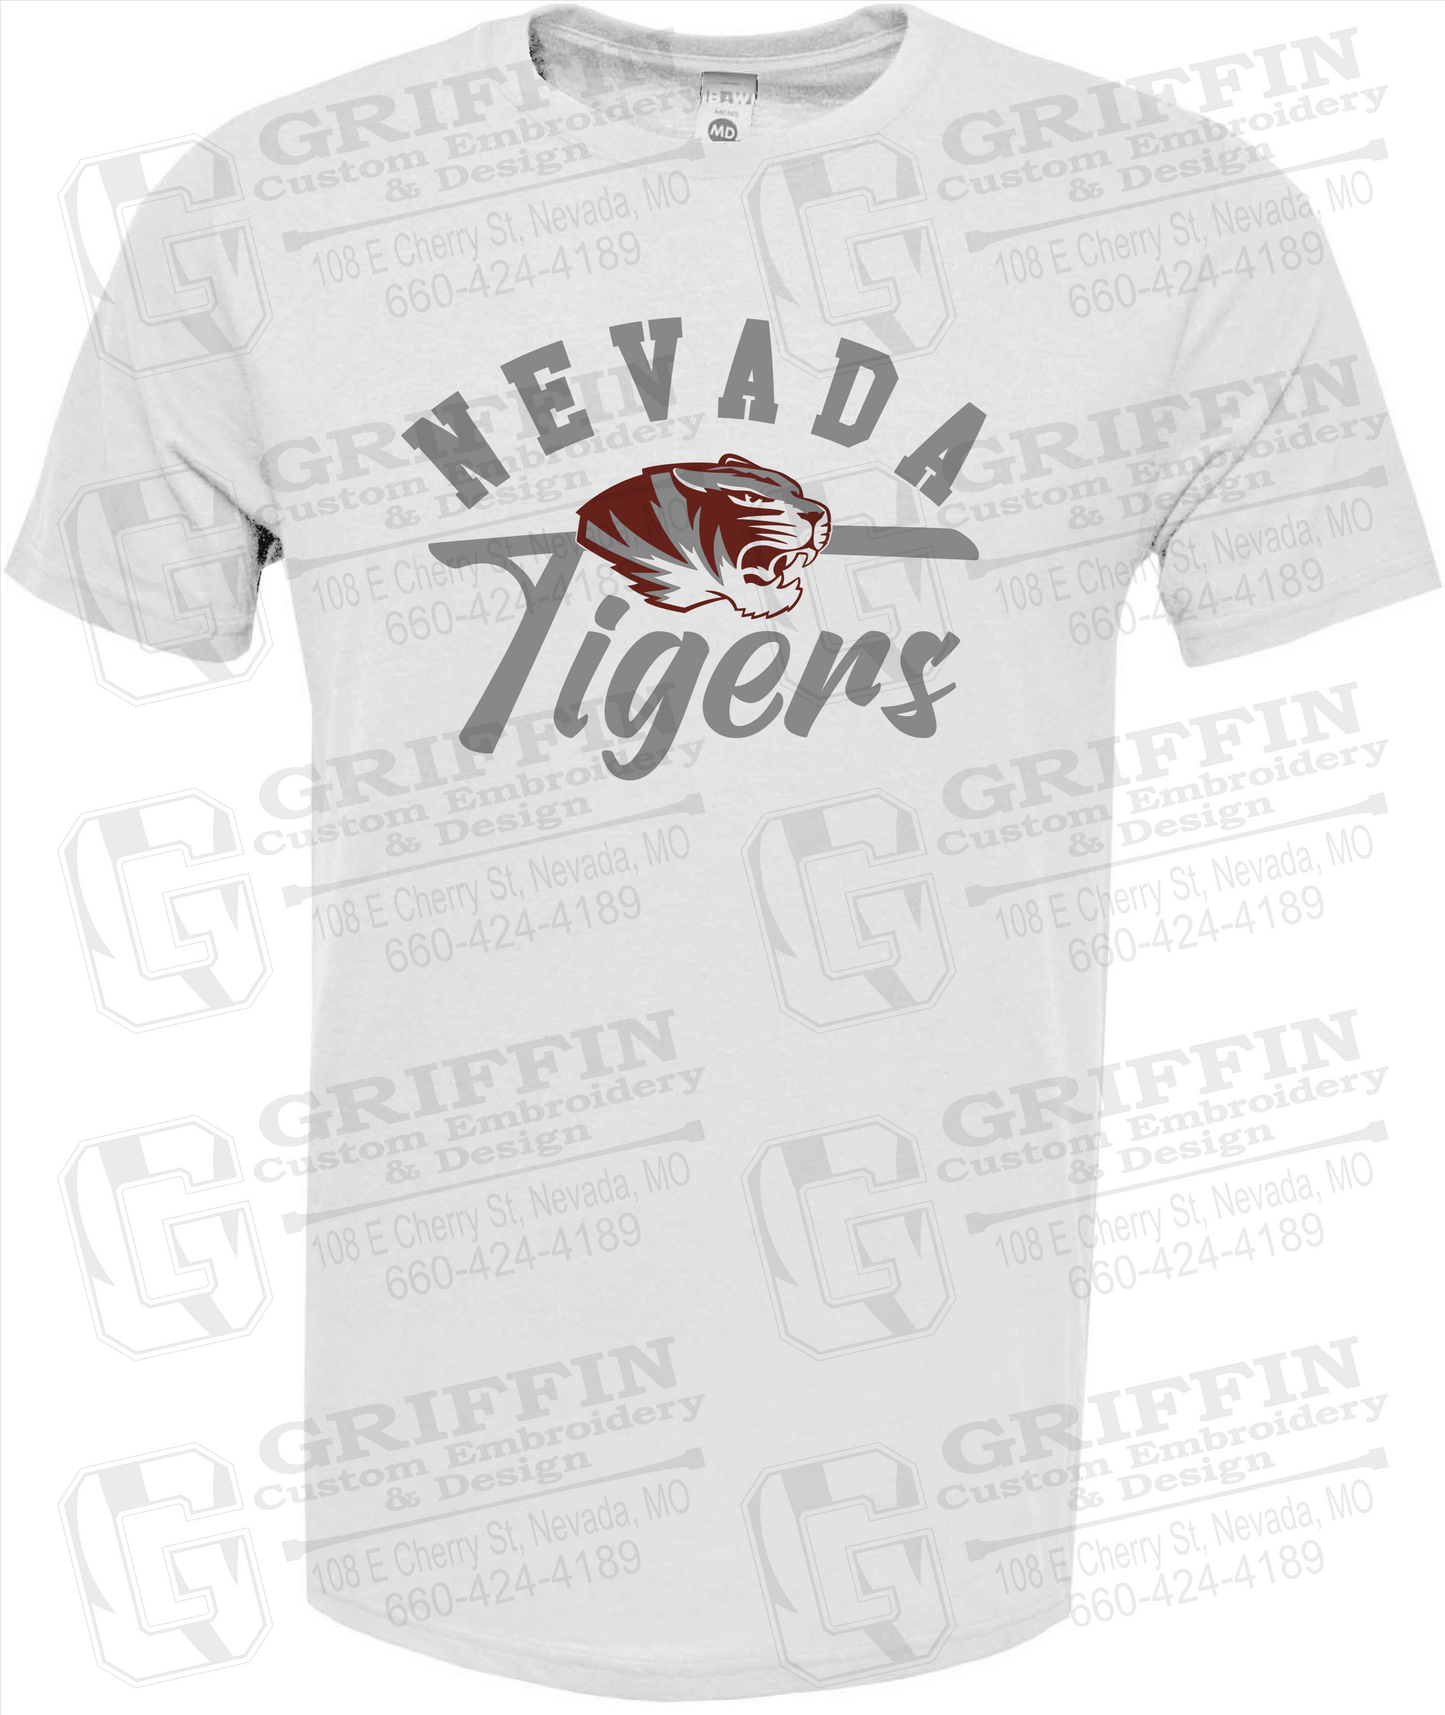 Nevada Tigers 20-Z Short Sleeve T-Shirt